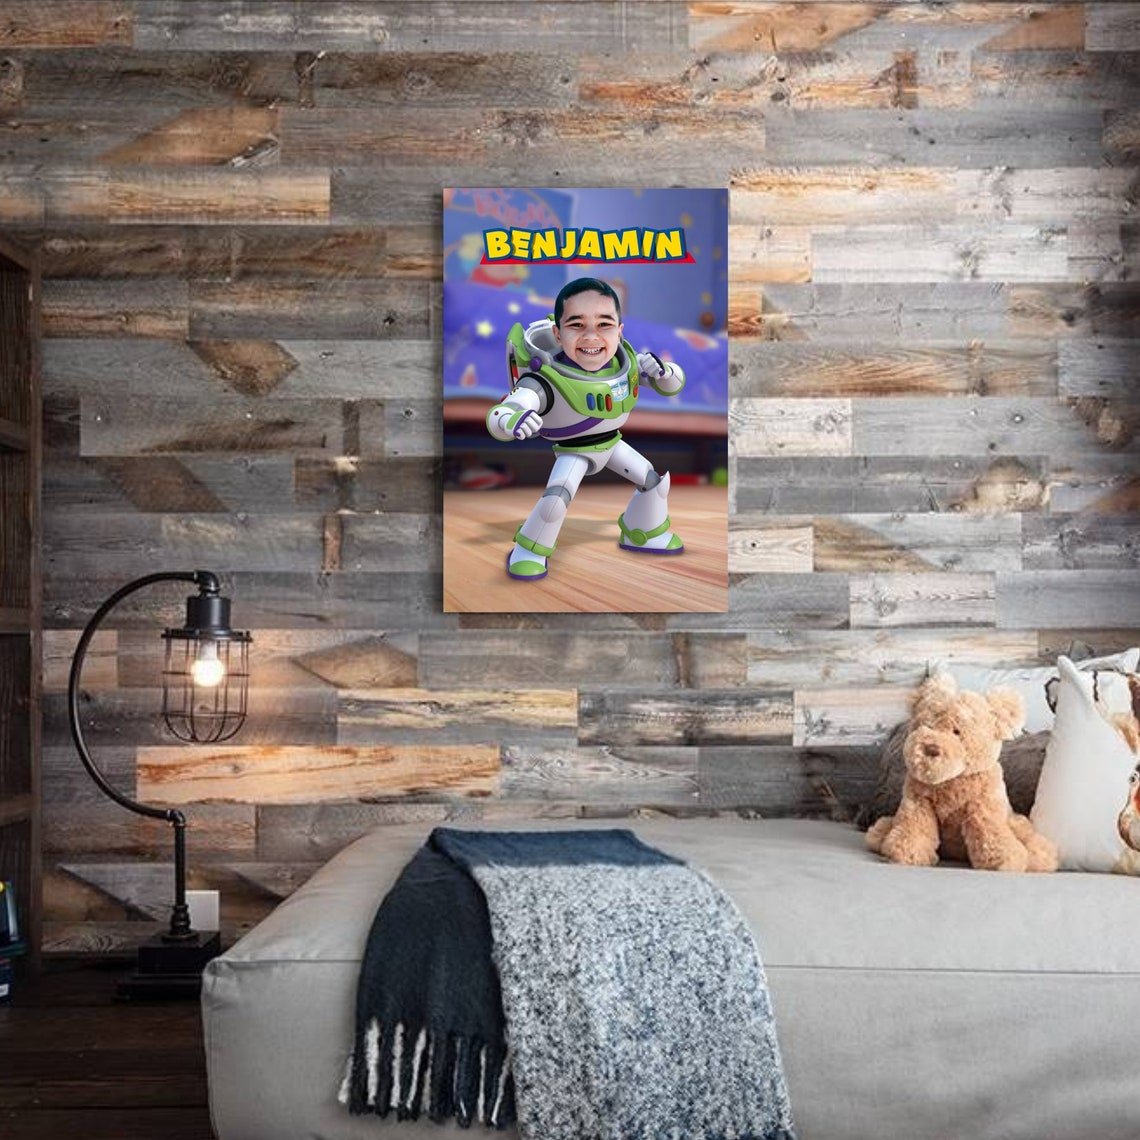 The Buzz Lightyear Custom Gift For Kids at My Kid's Dream mykidsdream.com